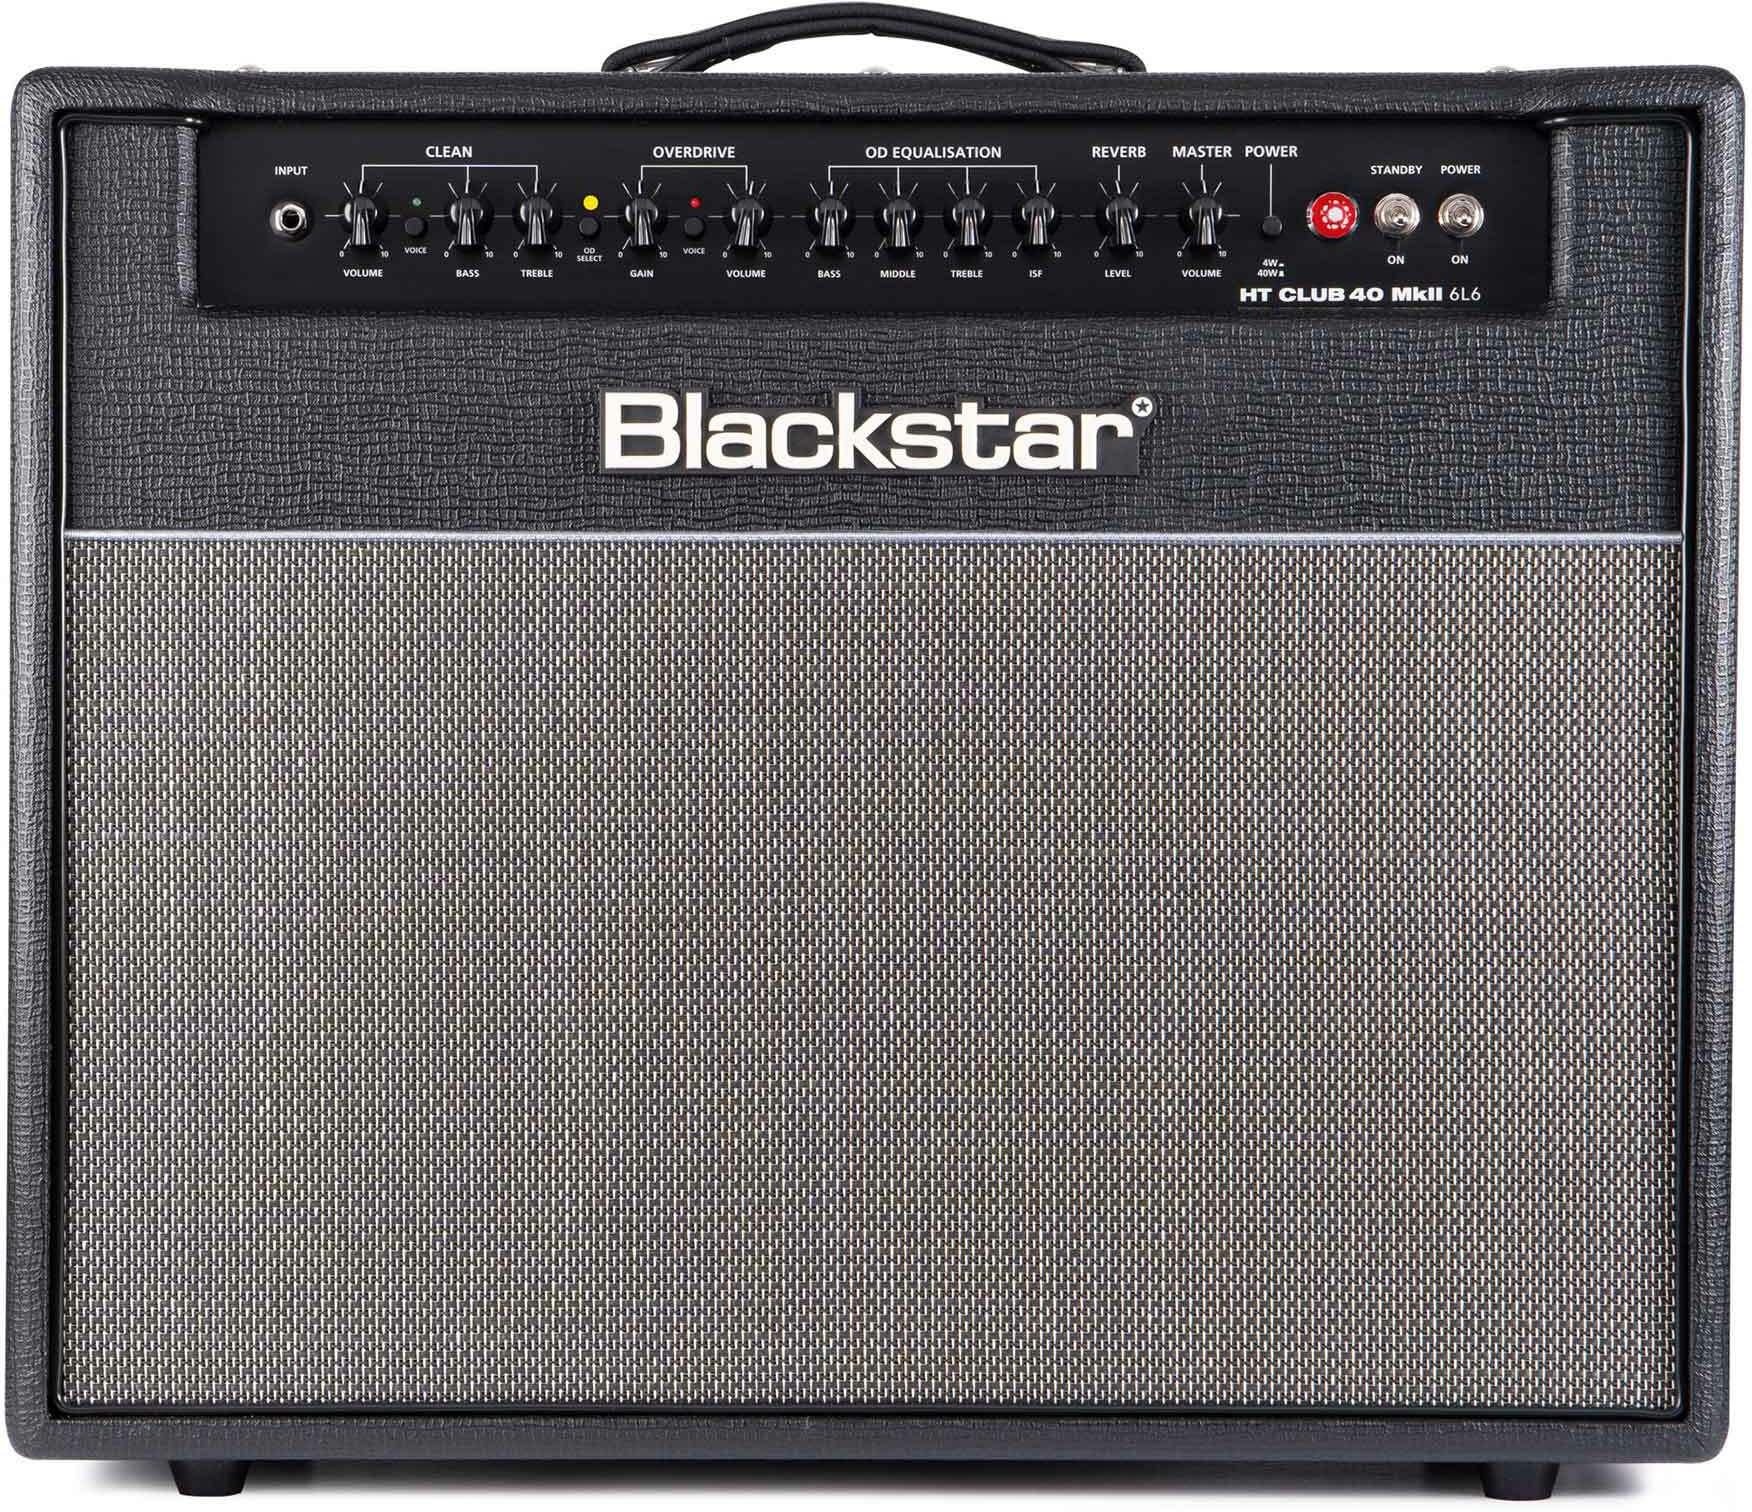 Blackstar Ht Club 40 Mkii 6l6 40w 1x12 Black - Electric guitar combo amp - Main picture